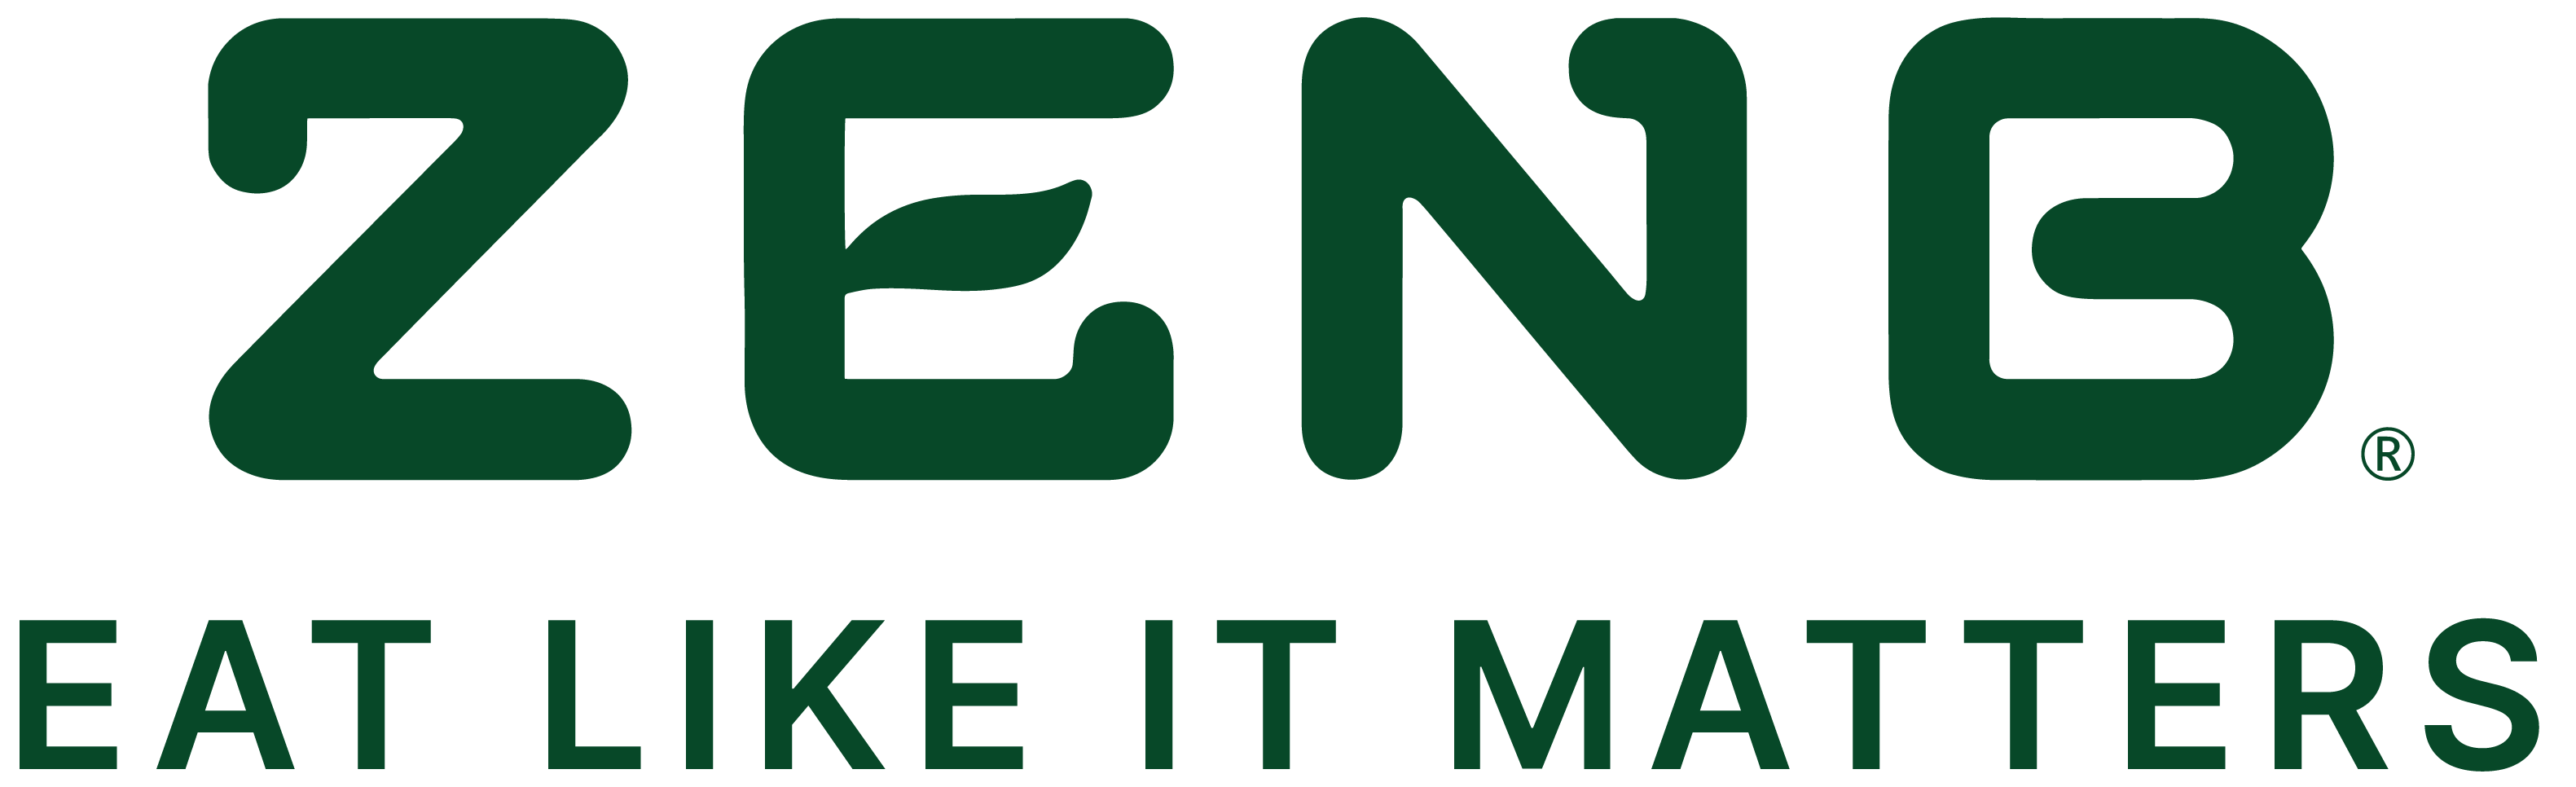 ZENB Logo Green R+Strapline